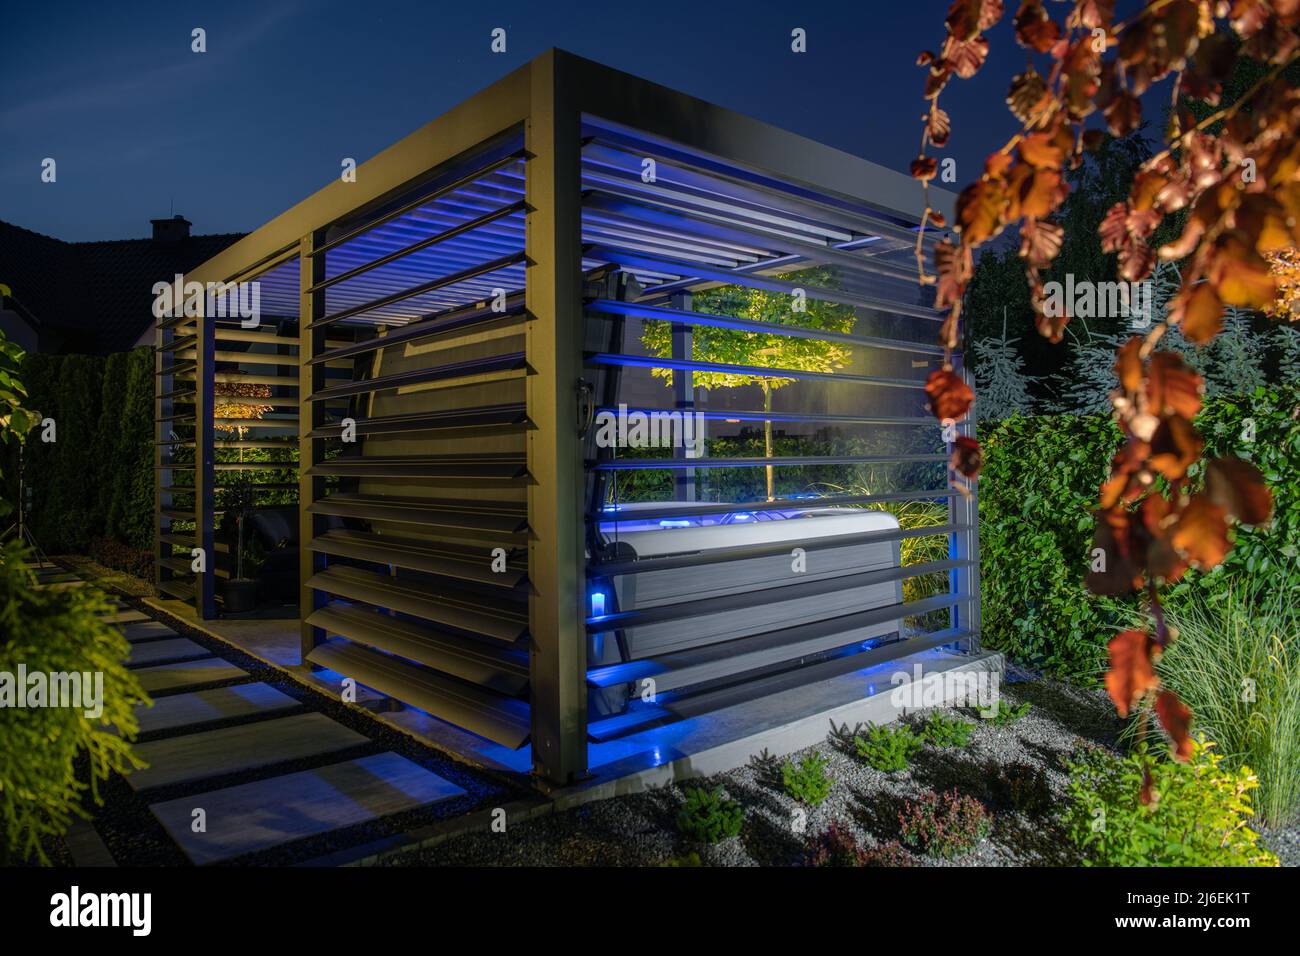 Aluminium Made Gazebo with Hot Tub Inside a Modern Garden. Small Architecture Elements. Stock Photo